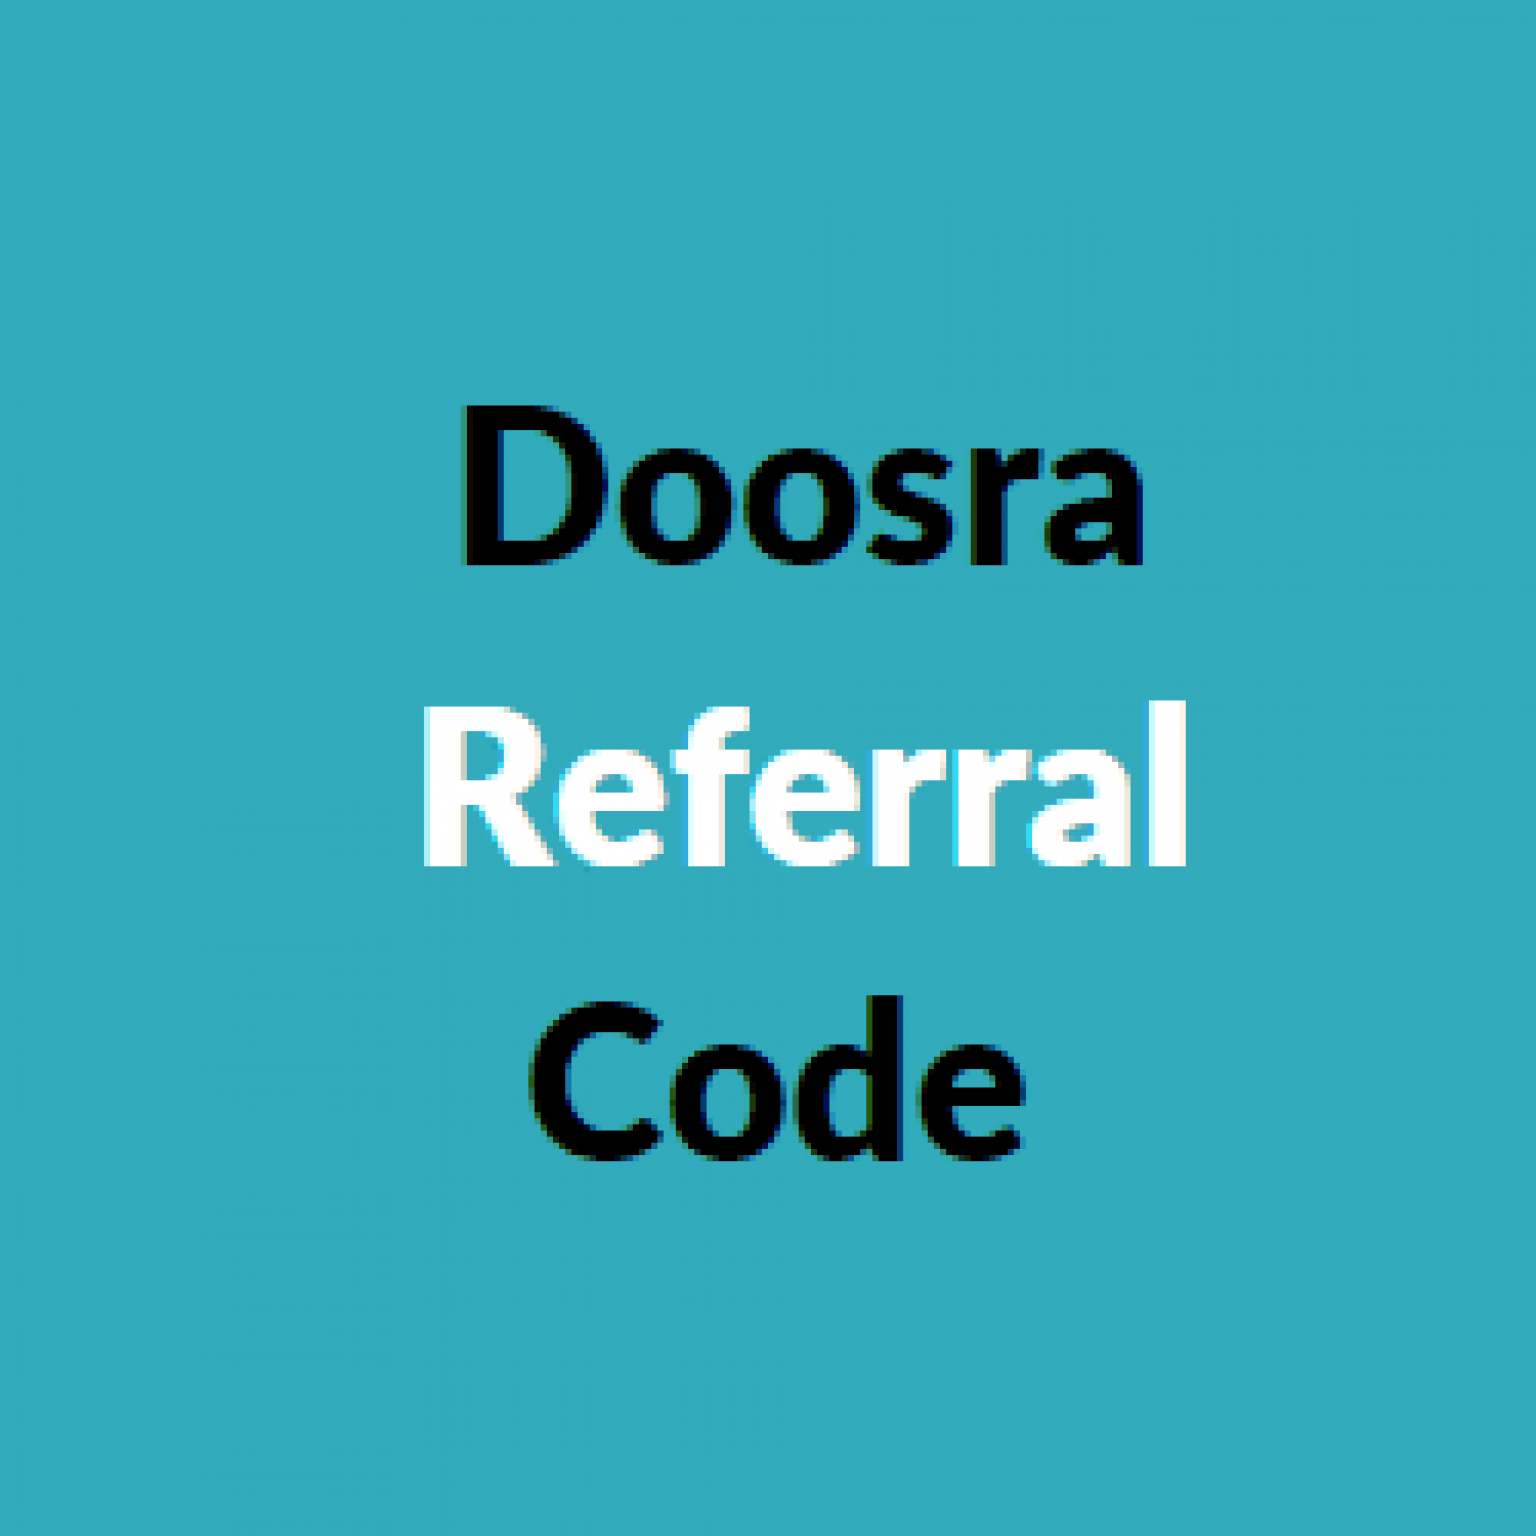 Doosra Referral Code [2021]: Get 6 Month Subscription